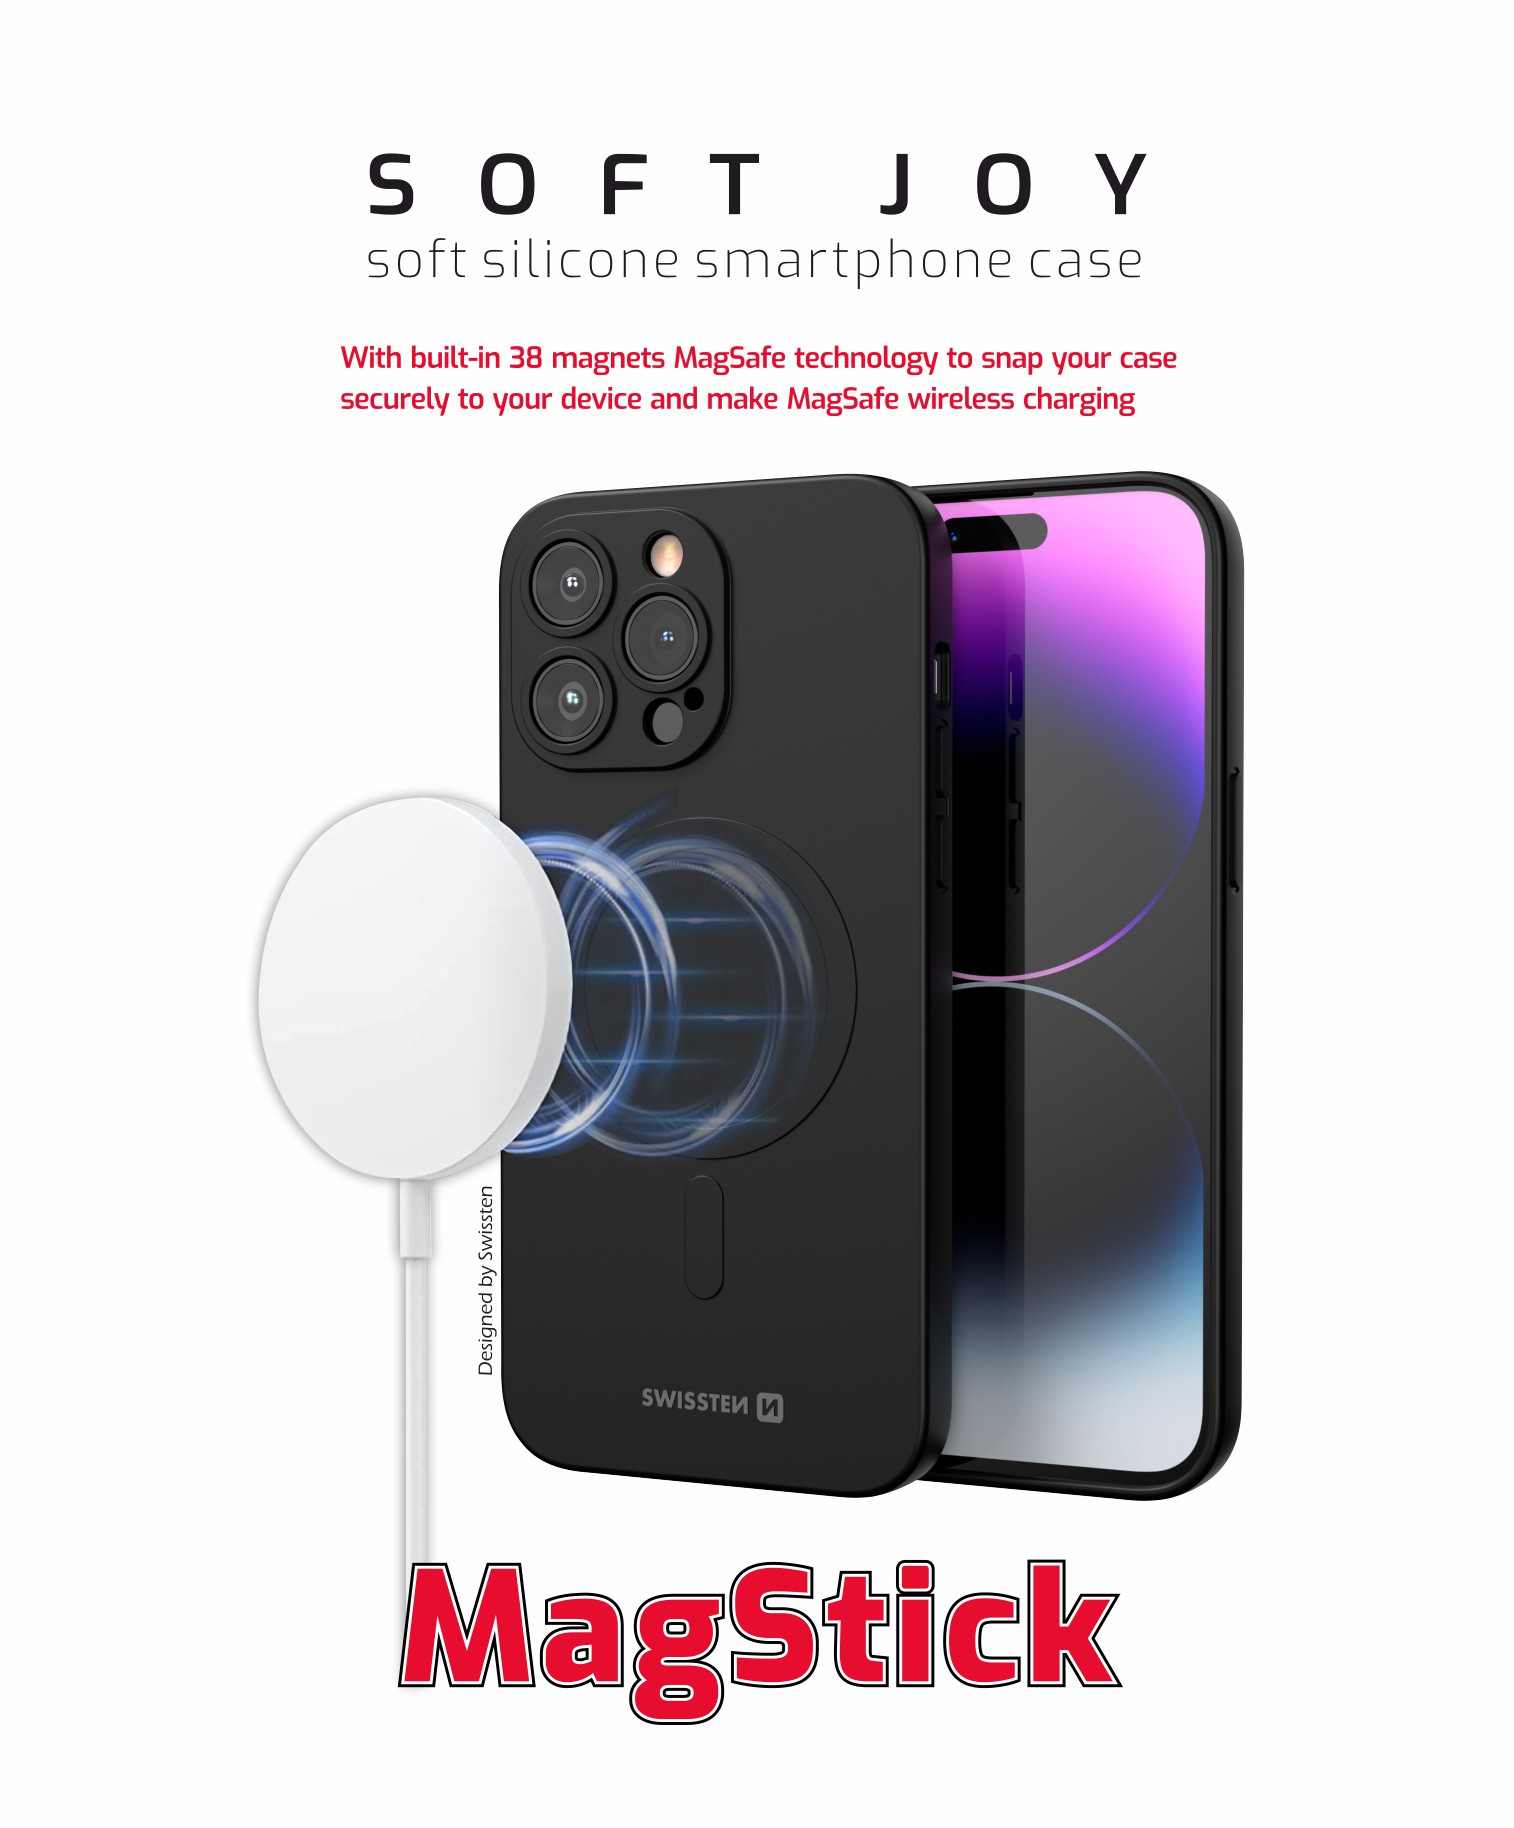 Swissten iPhone 13 Soft Joy Magstick Case - 35500110 - For Magsafe Charging - Black